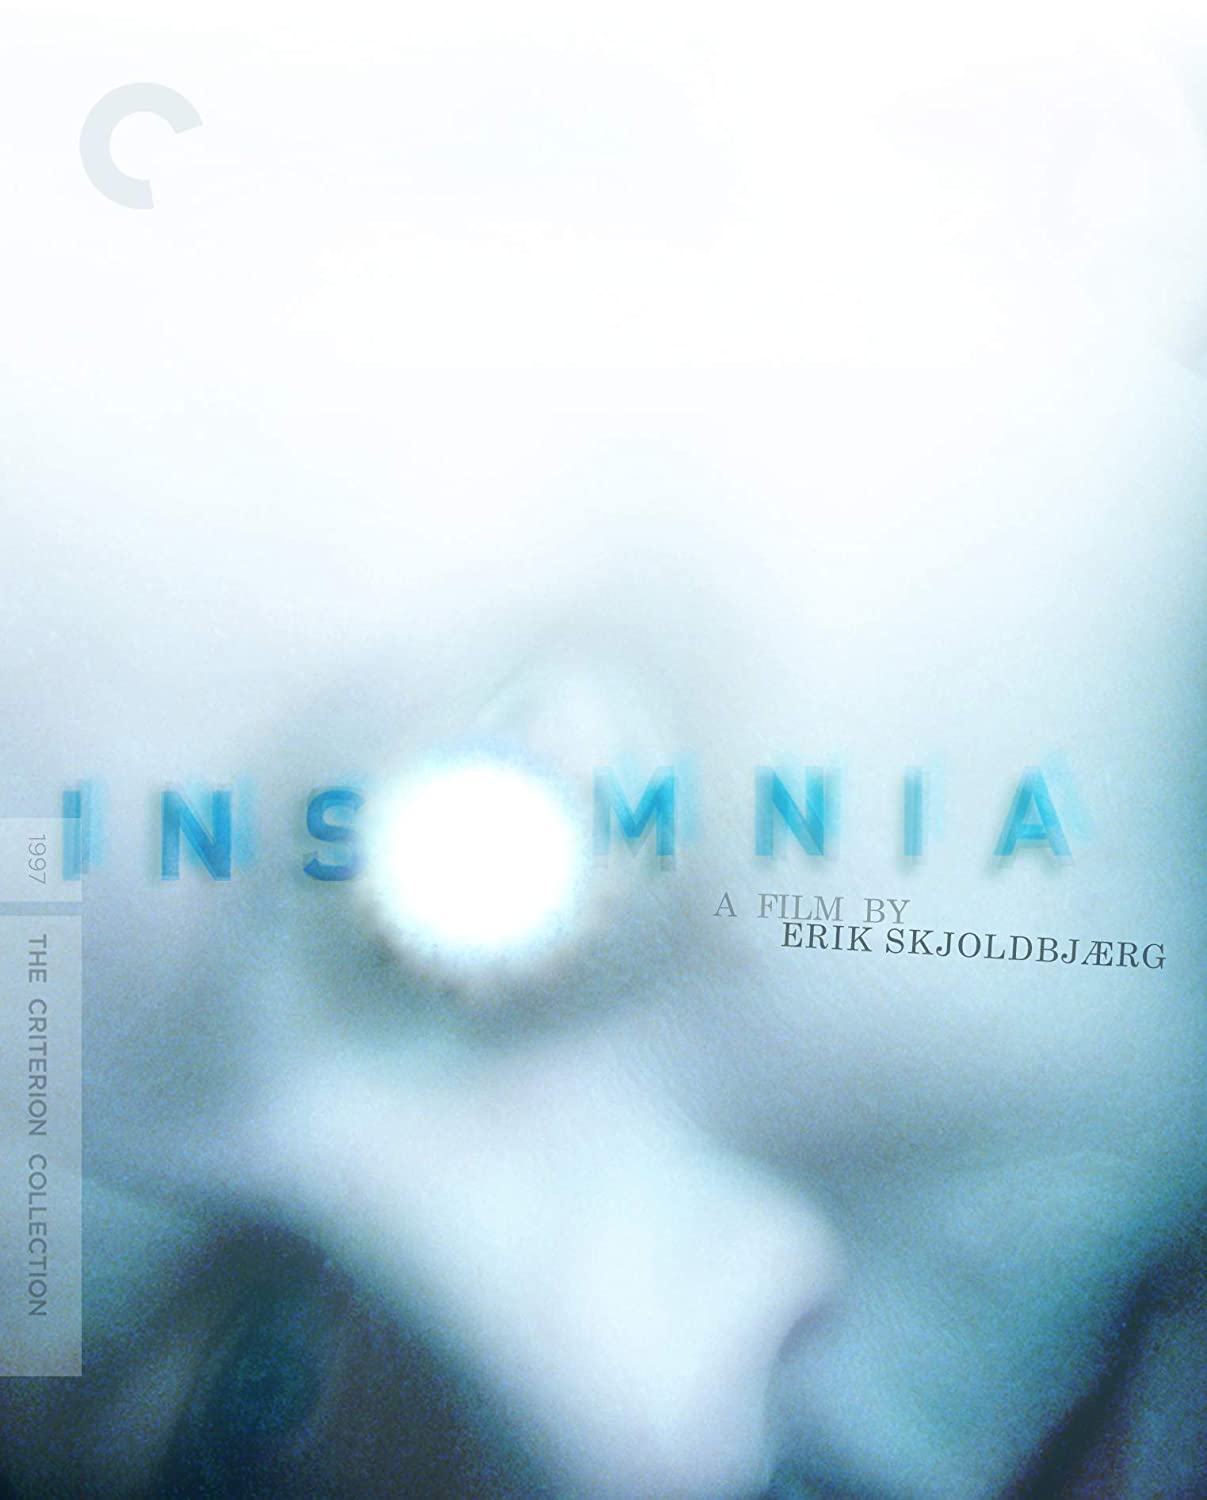 Insomnia (1997) (Criterion) - Darkside Records